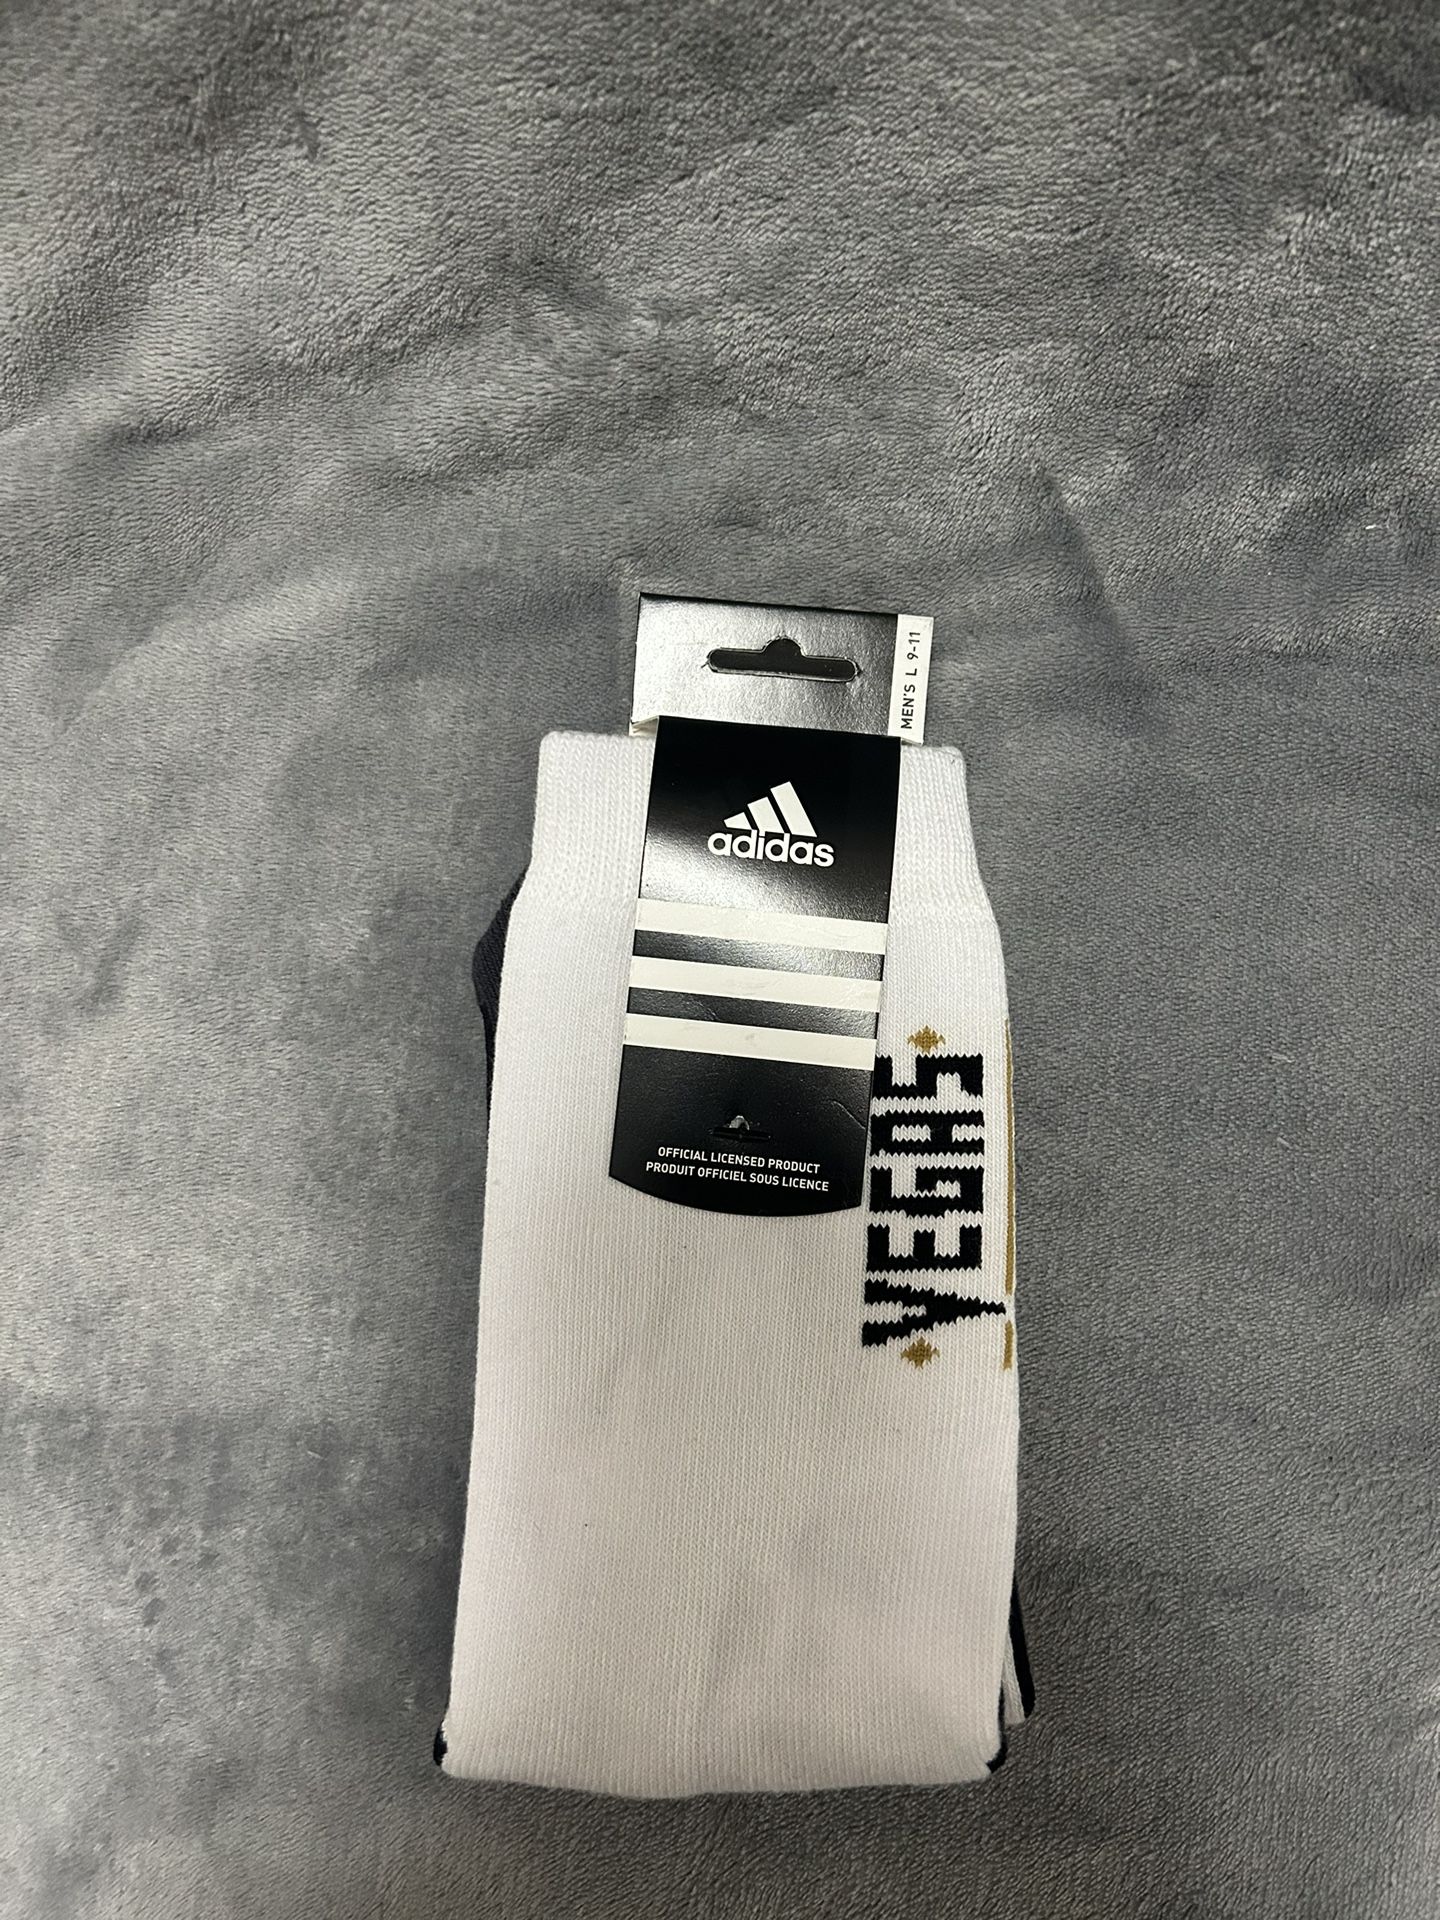 Adidas Vegas knights socks size large